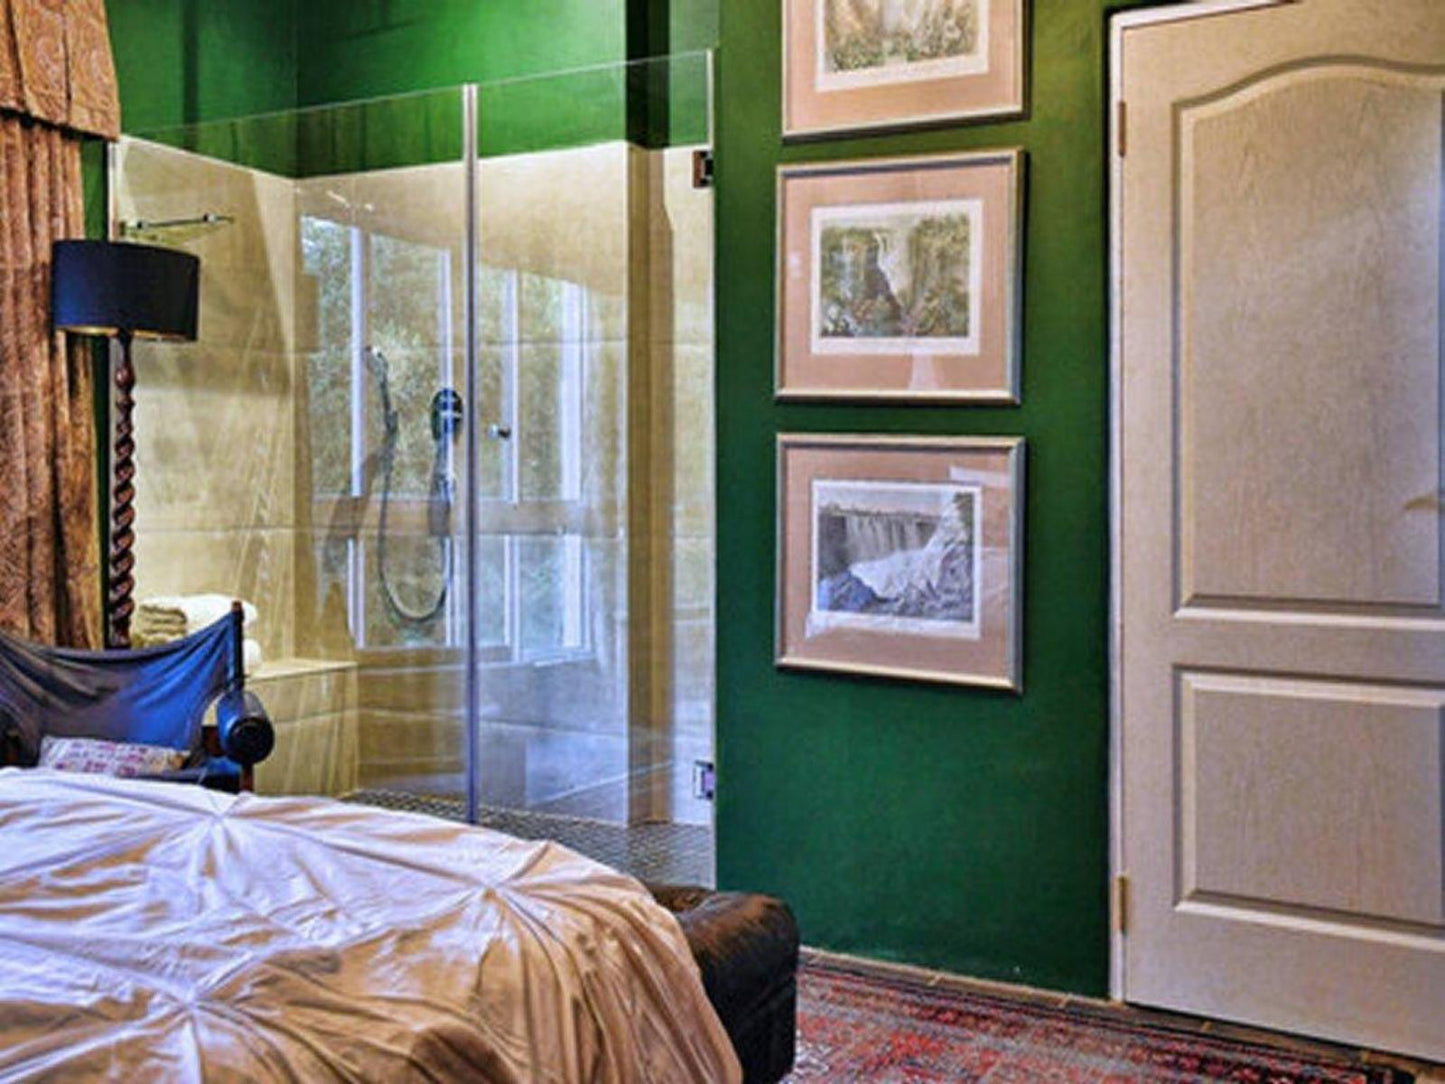 The Jonas Kaufmann Room @ House Of Visconti